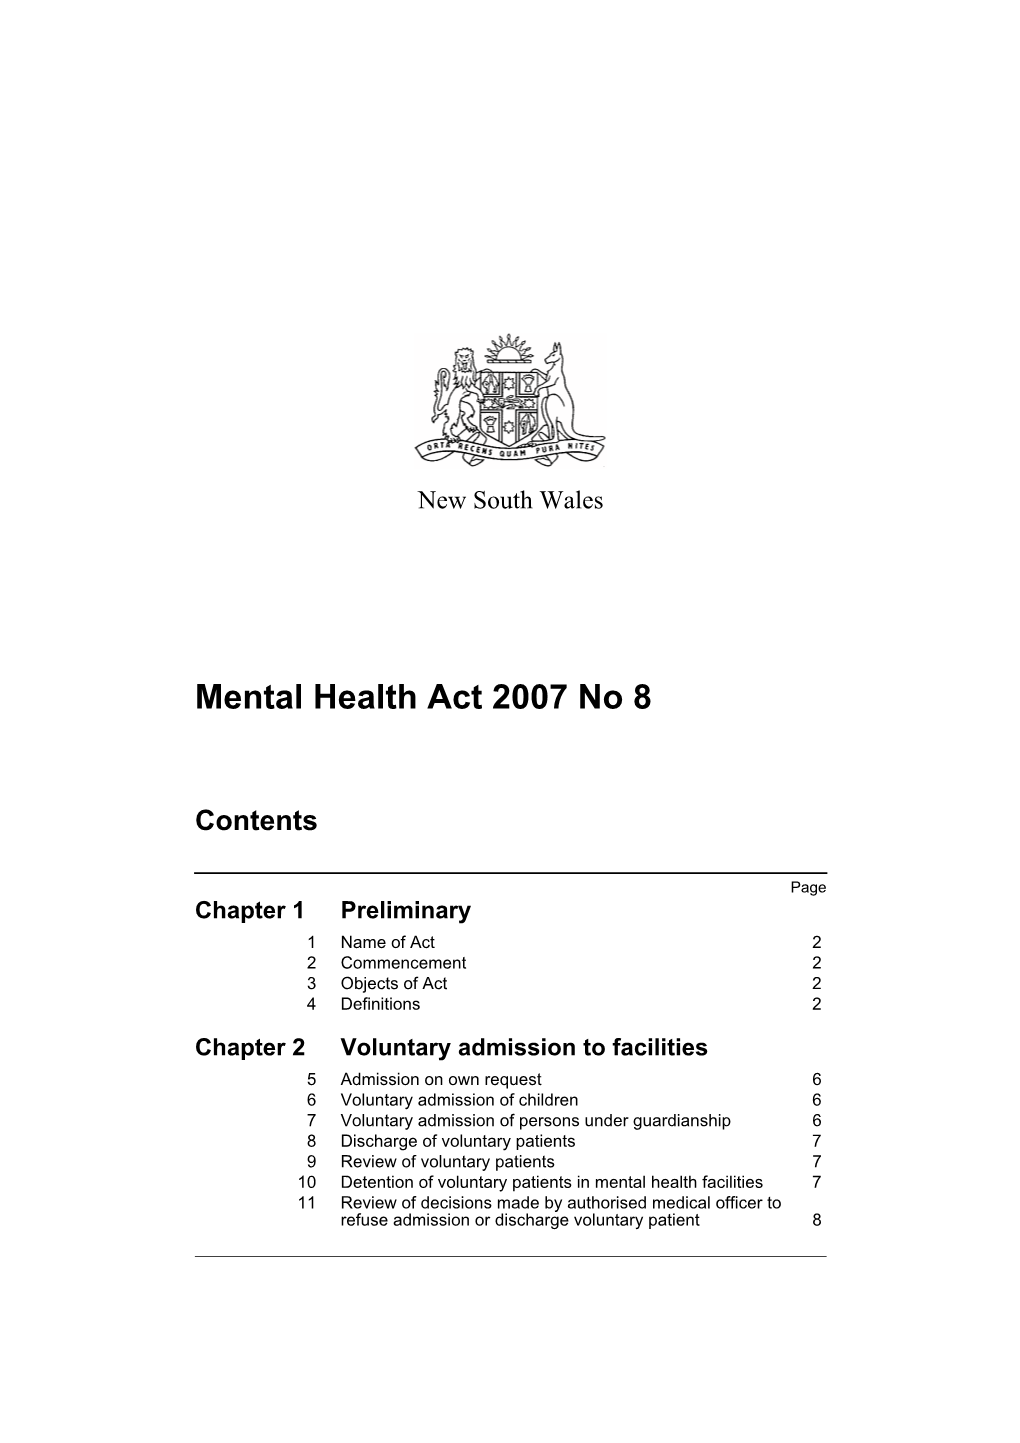 Mental Health Act 2007 No 8